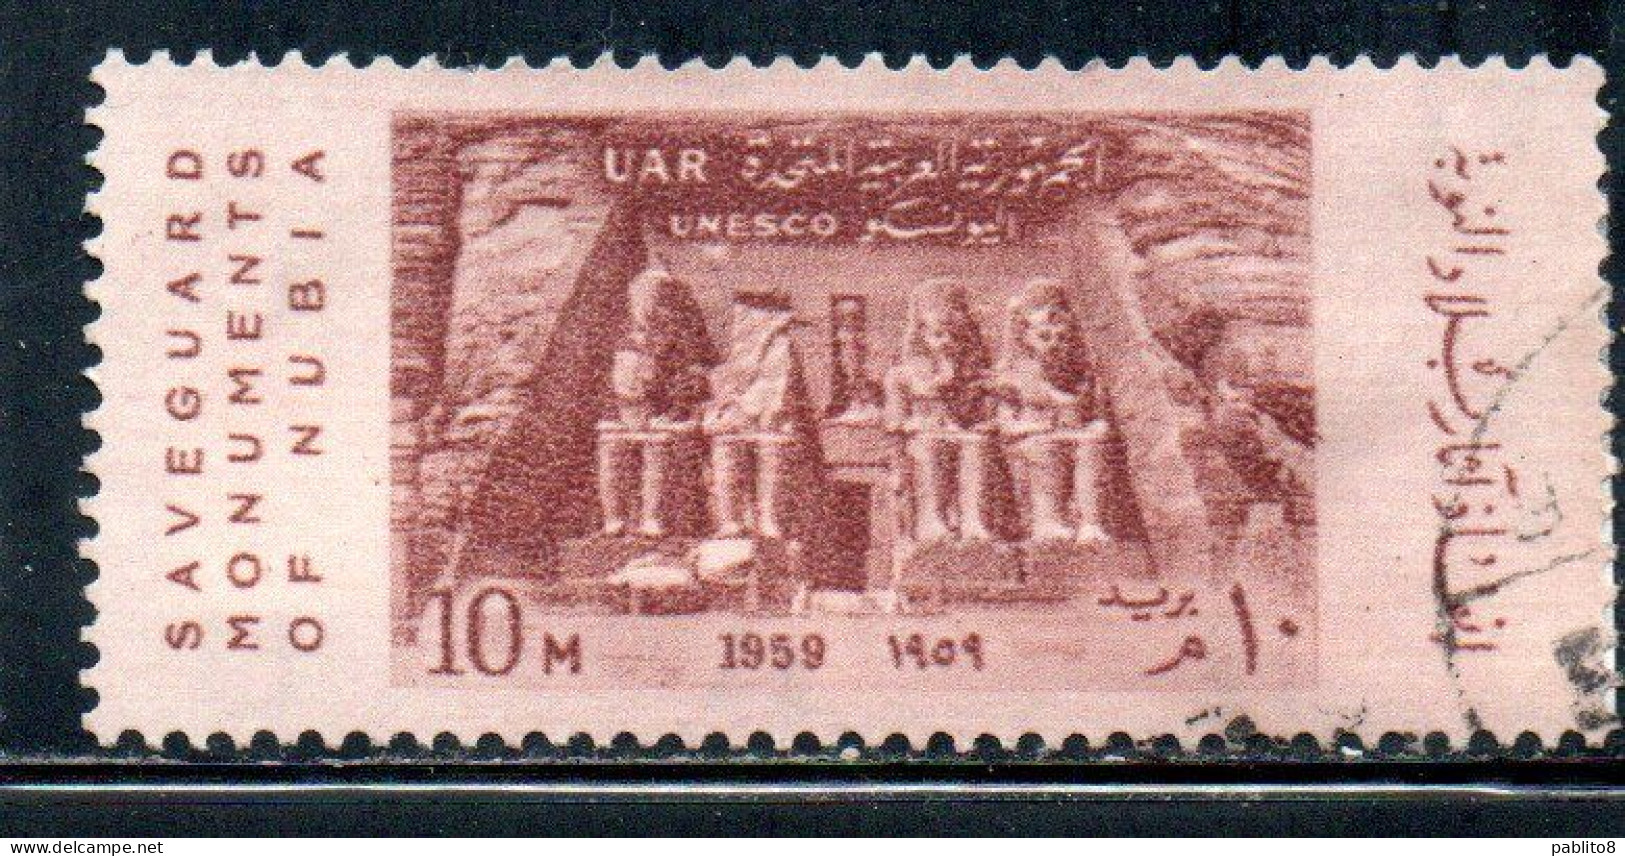 UAR EGYPT EGITTO 1959 SAVE HISTORIC MONUMENTS IN NUBIA ABU SIMBEL TEMPLE OF RAMSES II 10m USED USATO OBLITERE' - Usati